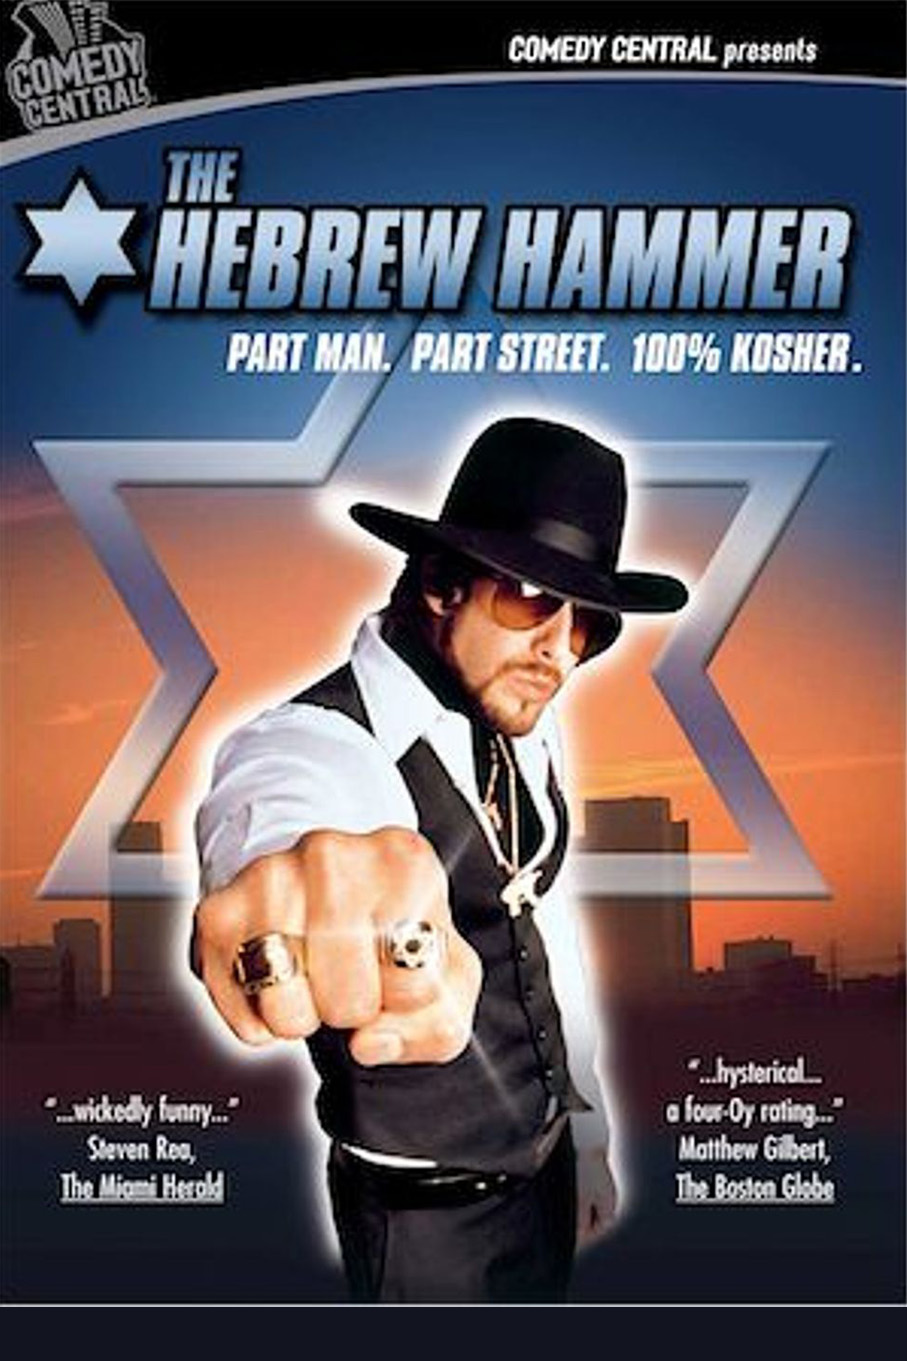 THE HEBREW HAMMER